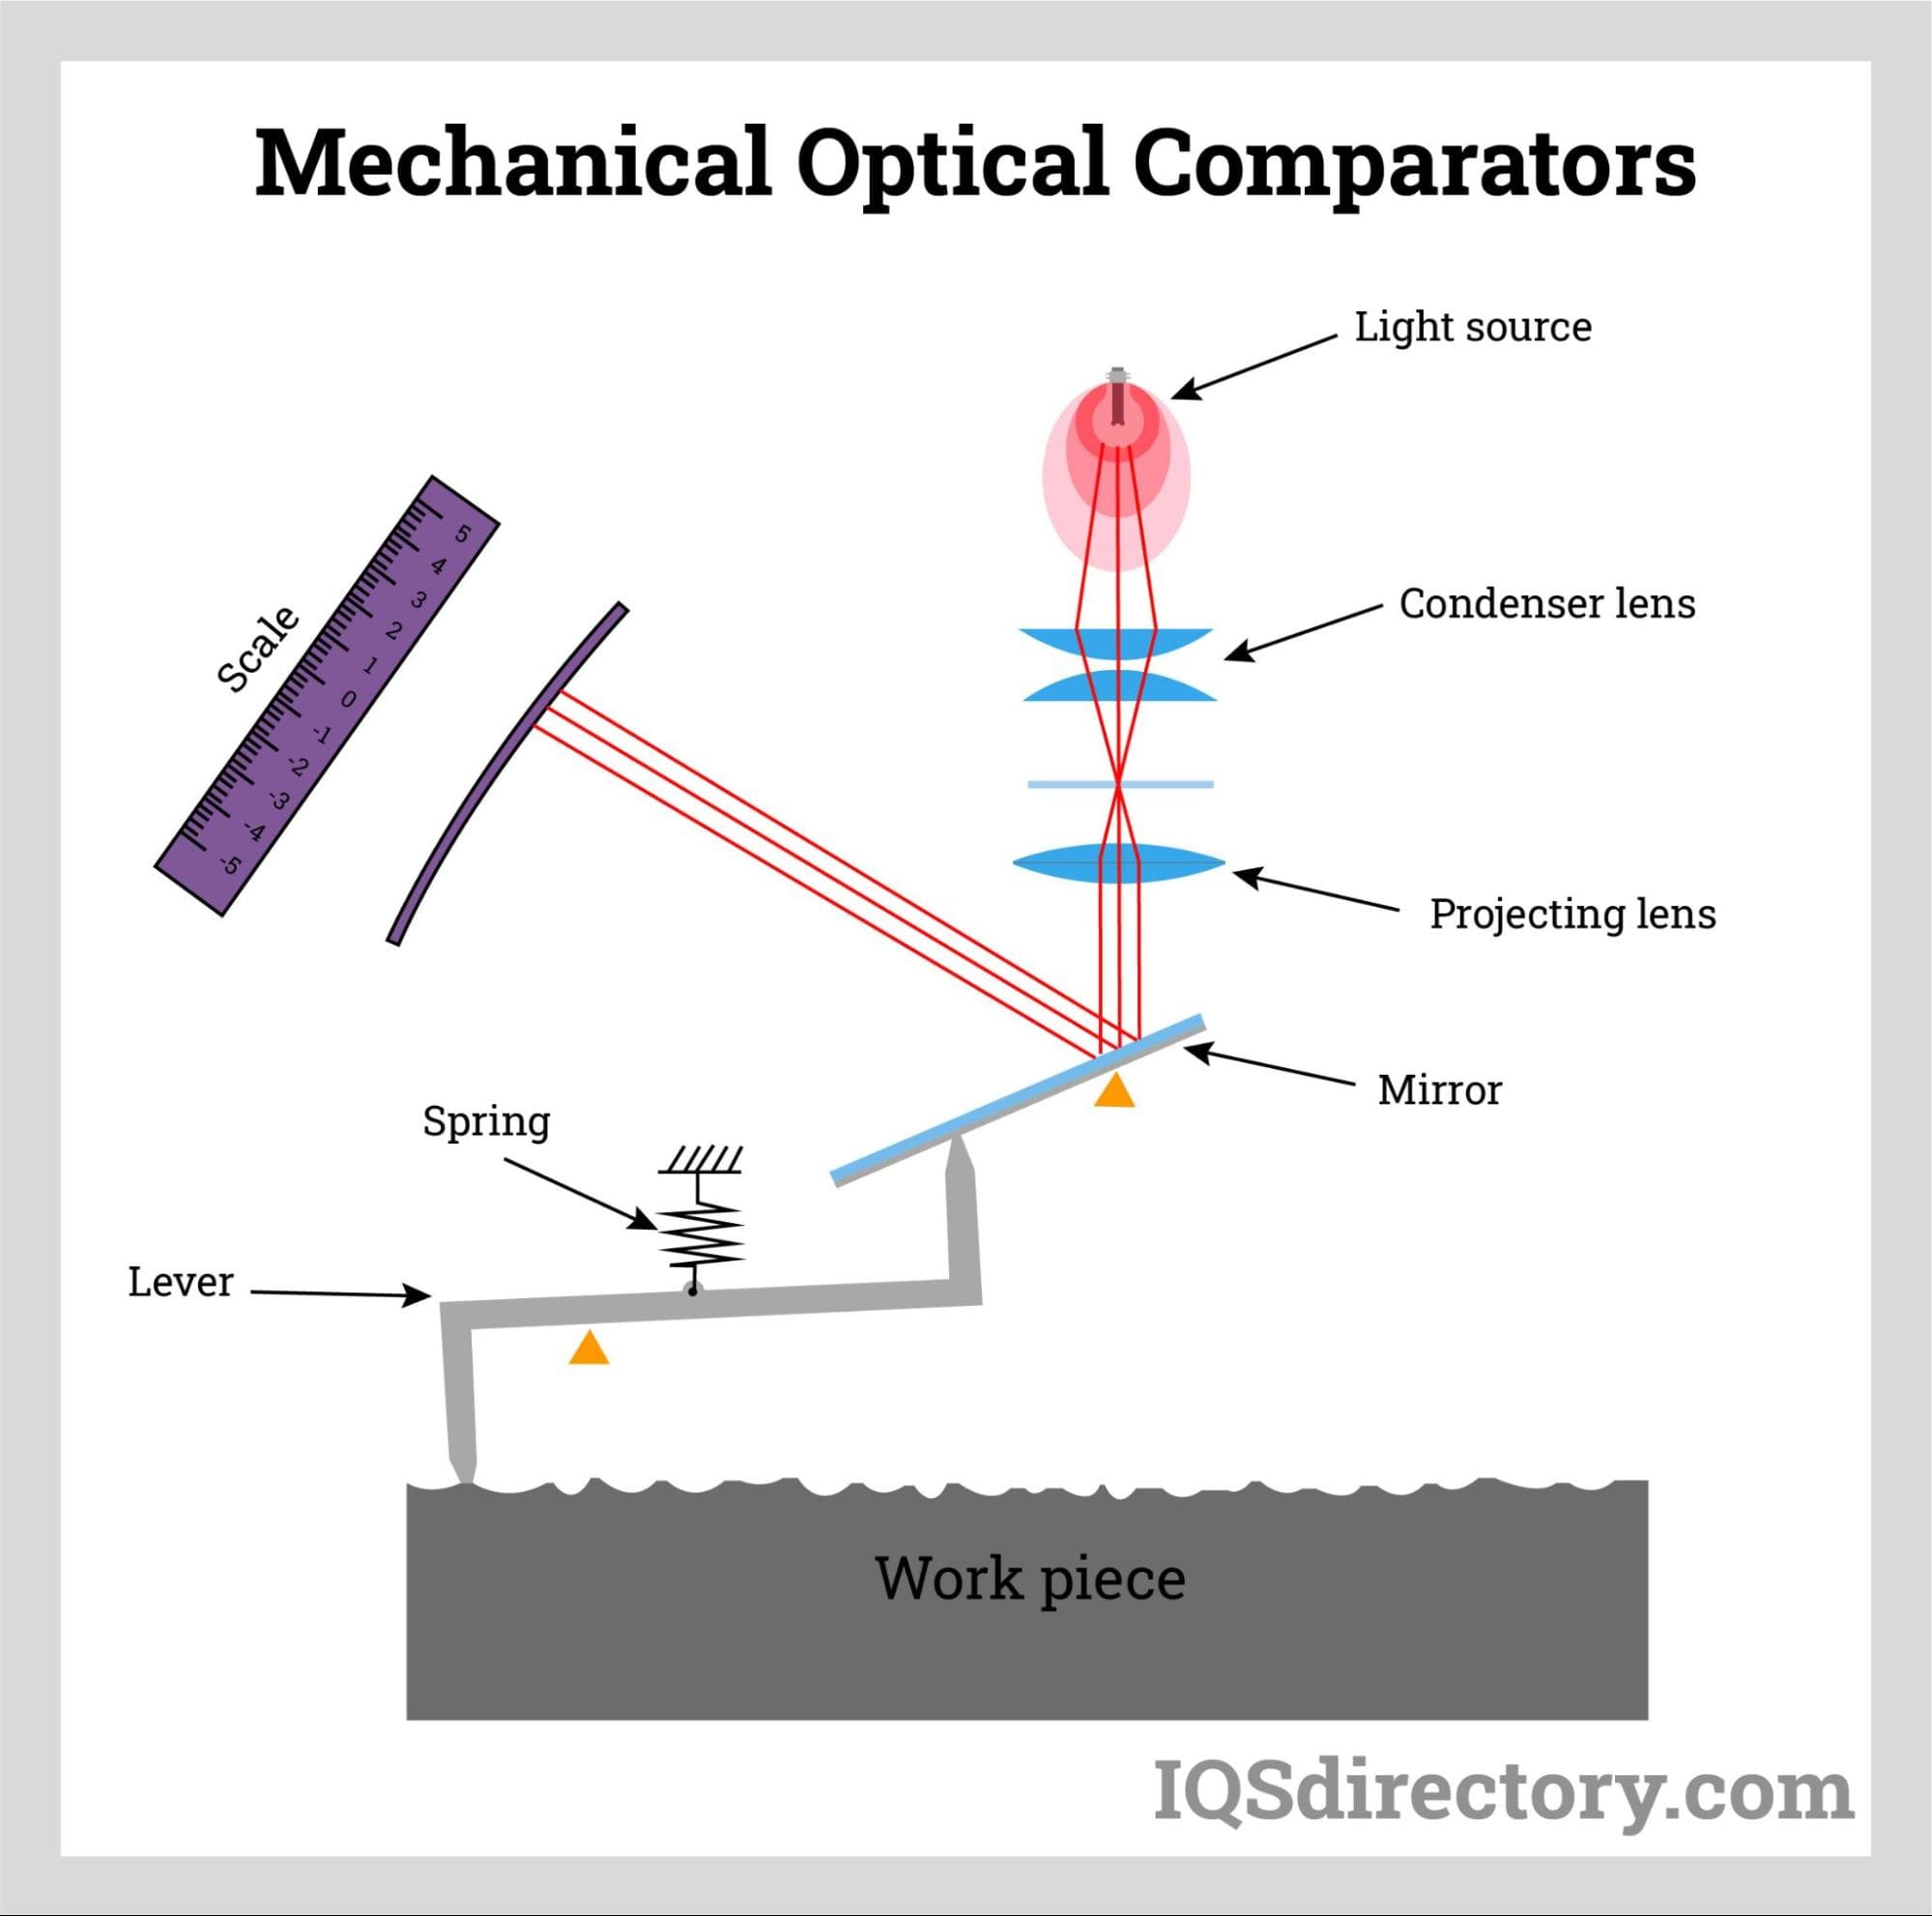 Mechanical Optical Comparators